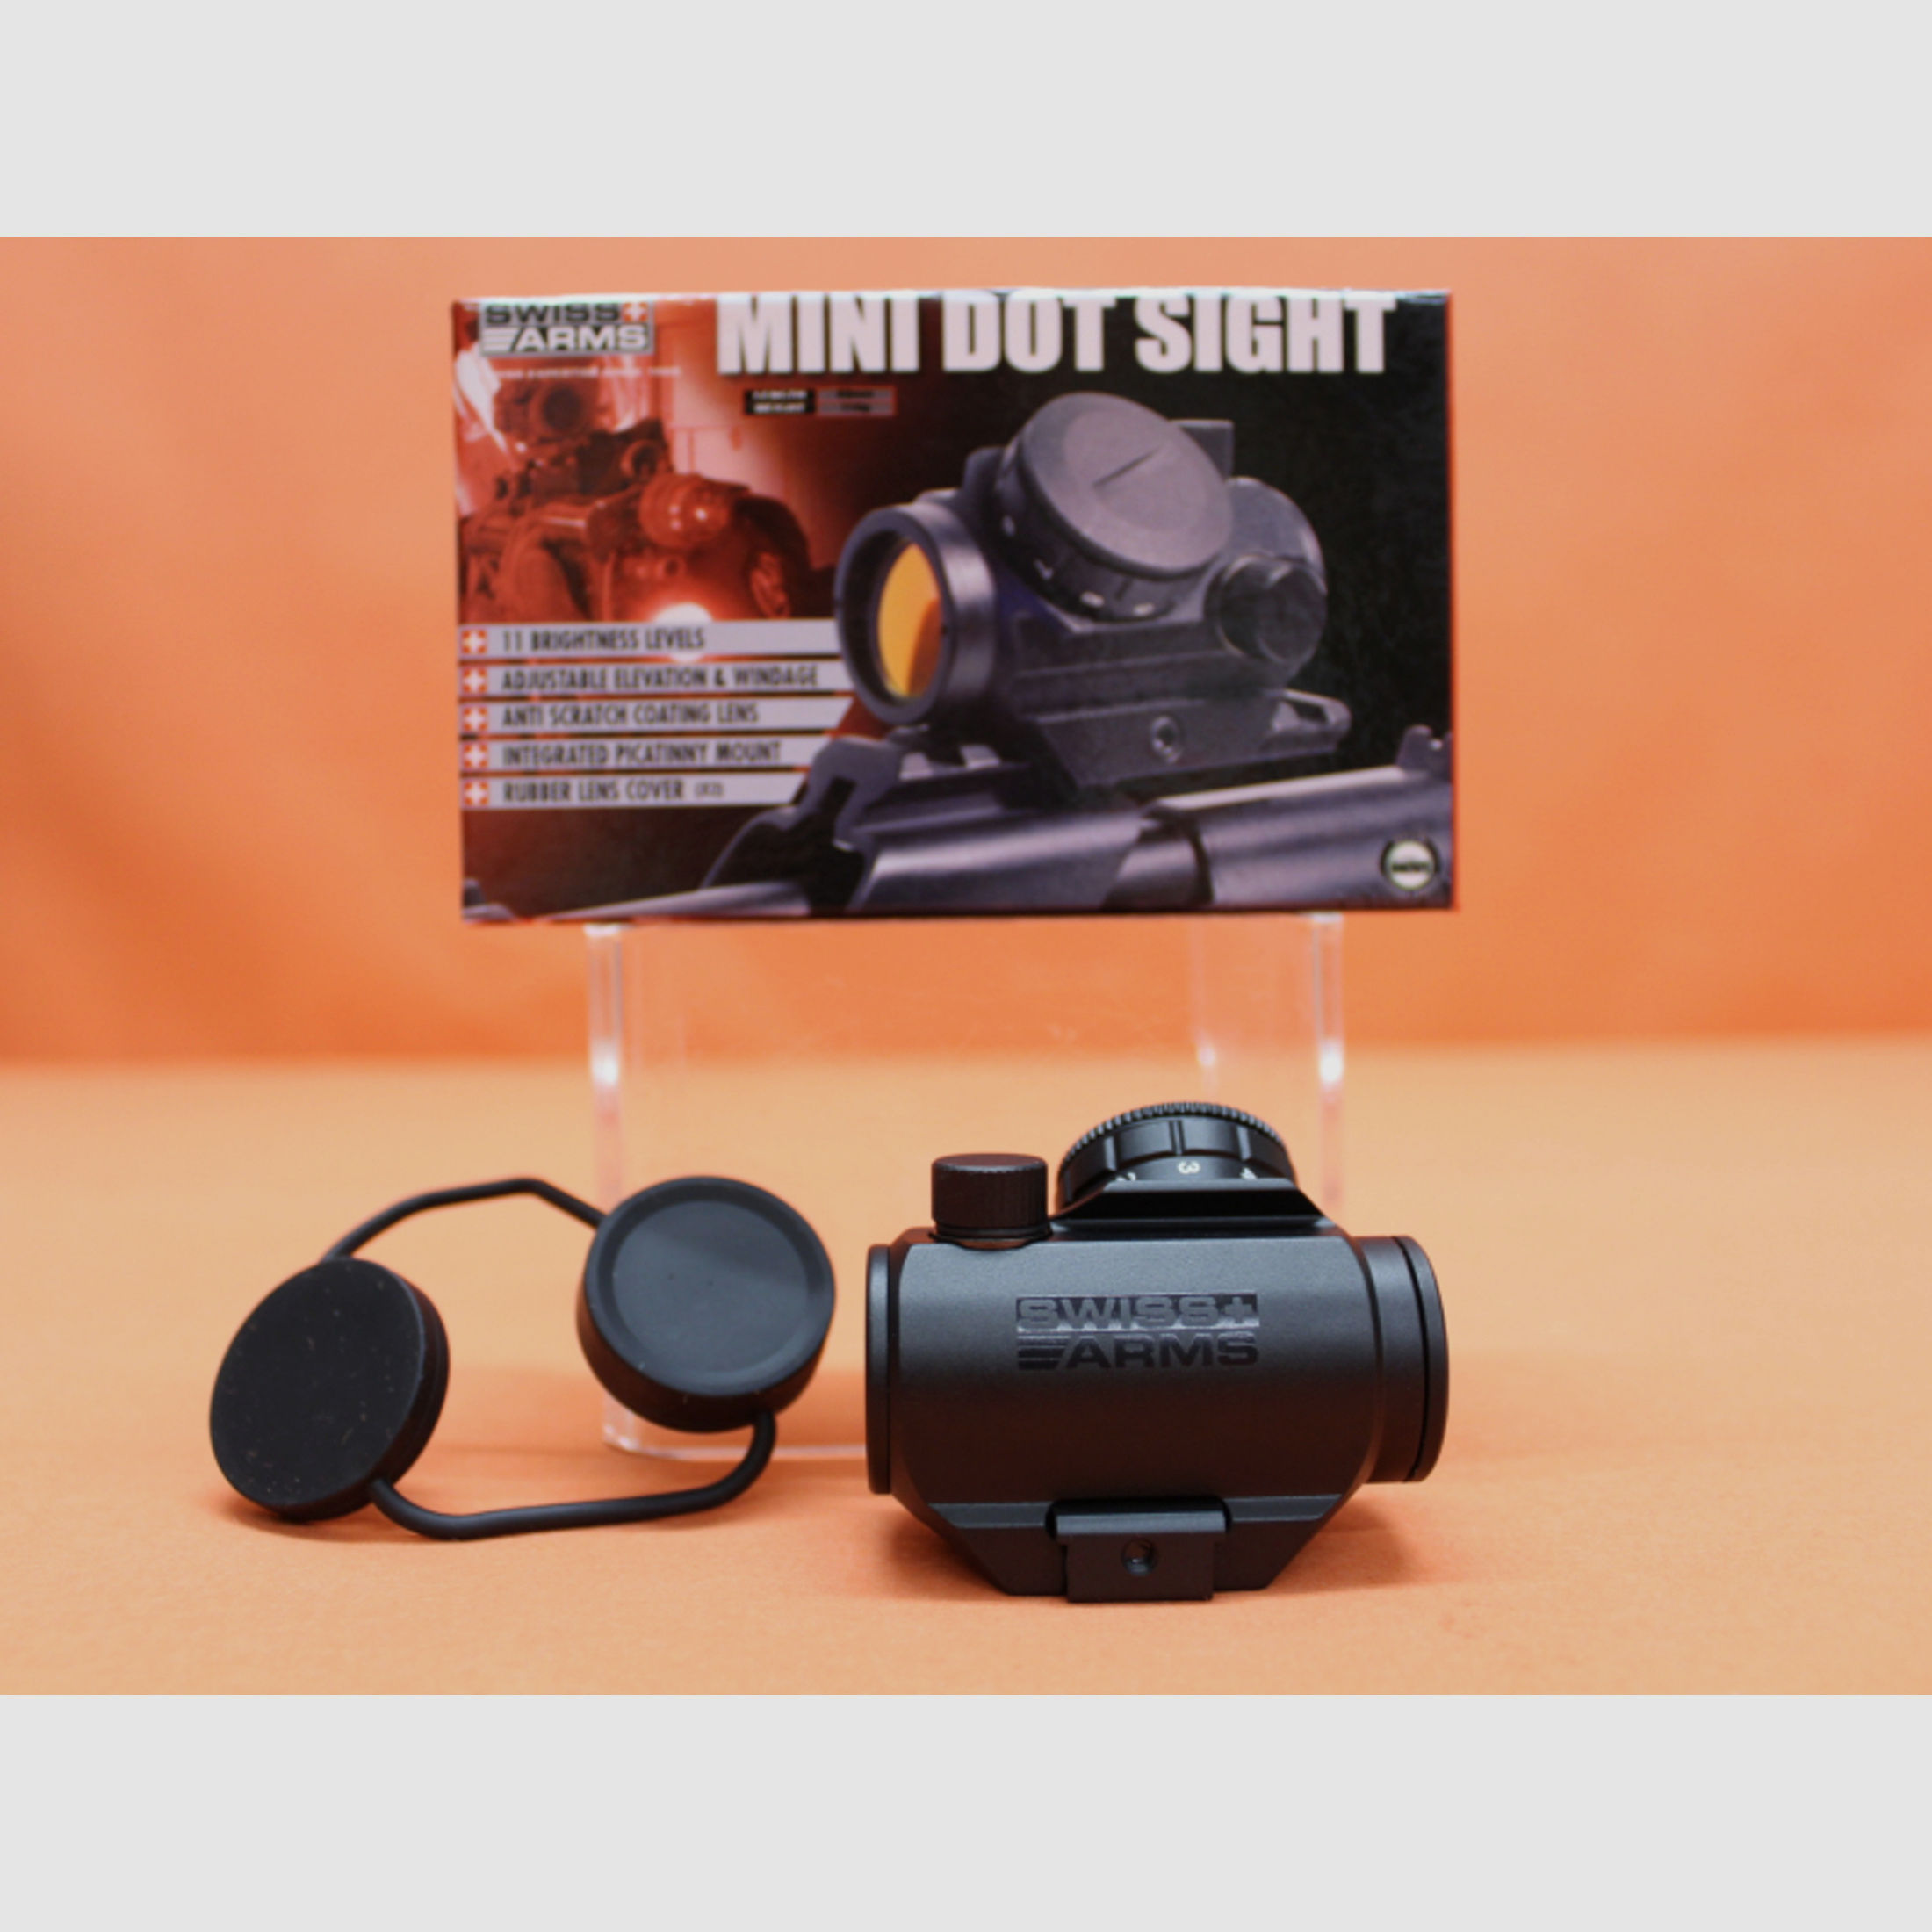 Swiss Arms Mini Red Dot Sight Leuchtpunktvisier mit Montage f. Weaver-/ Picatinnyprofil